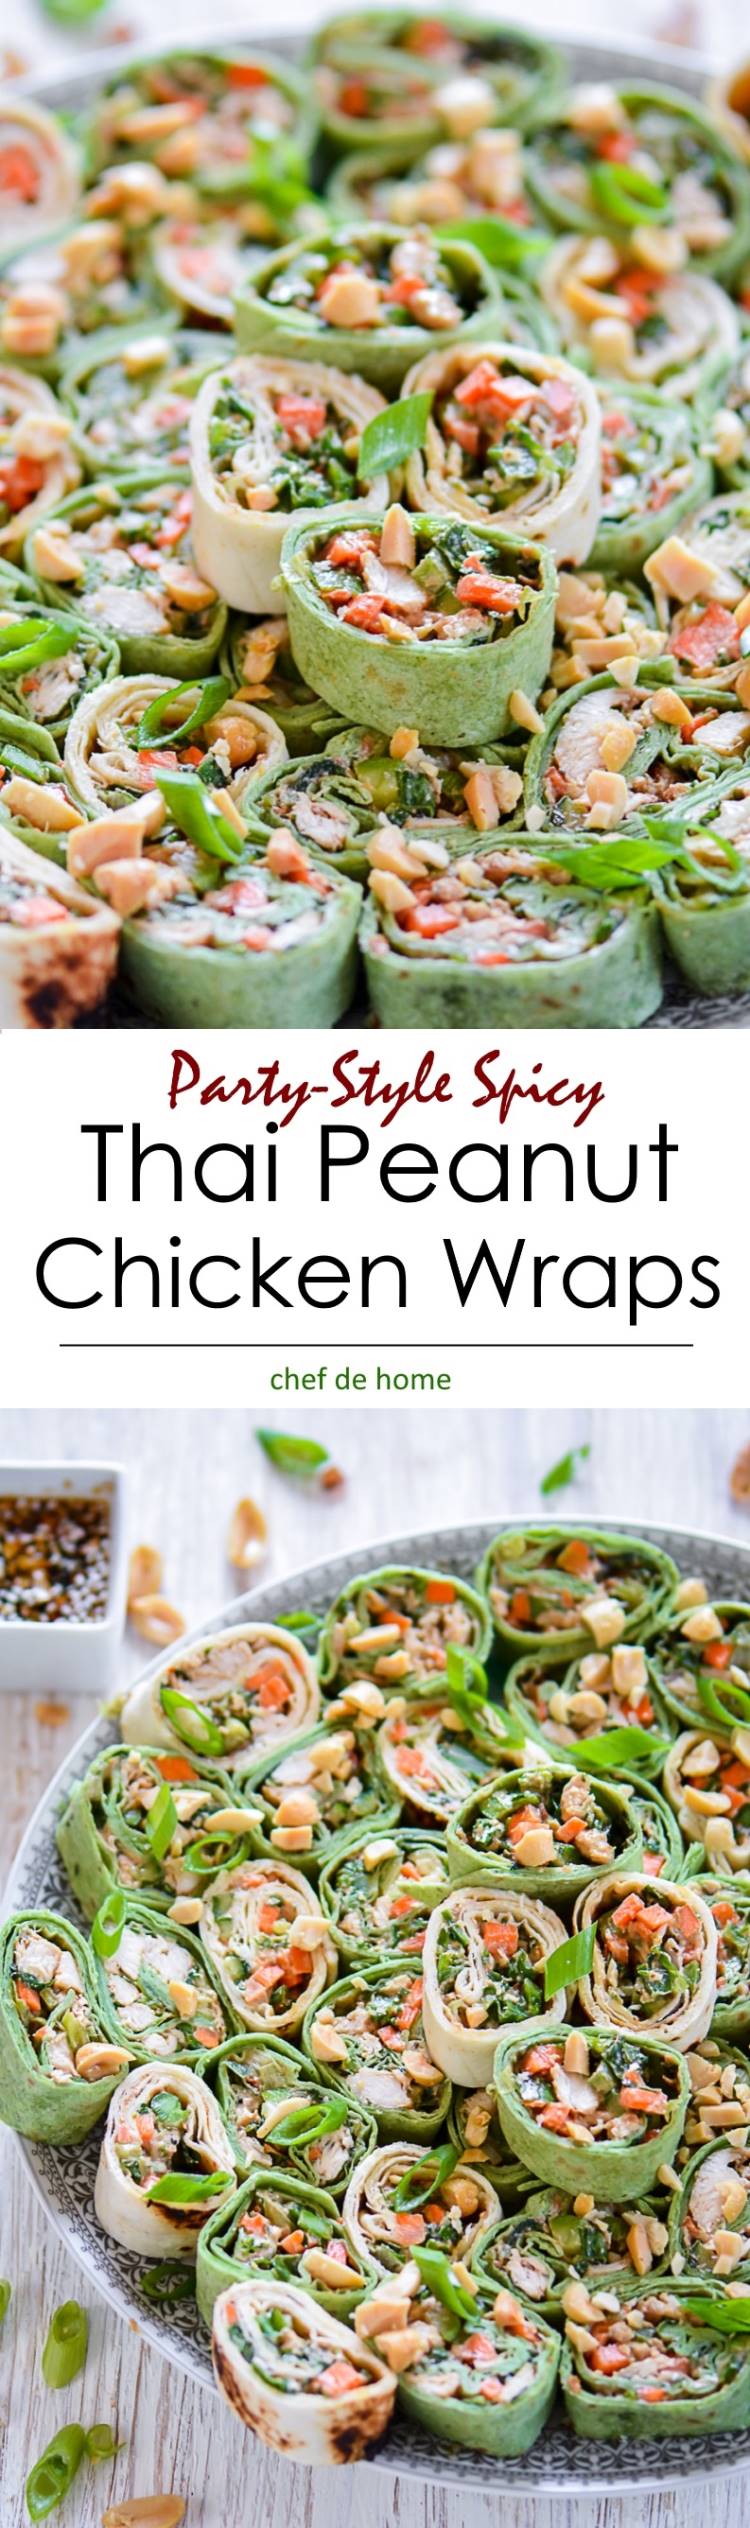 Thai Peanut Chicken Wraps with spicy peanut sauce and crunchy veggies | chefdehome.com